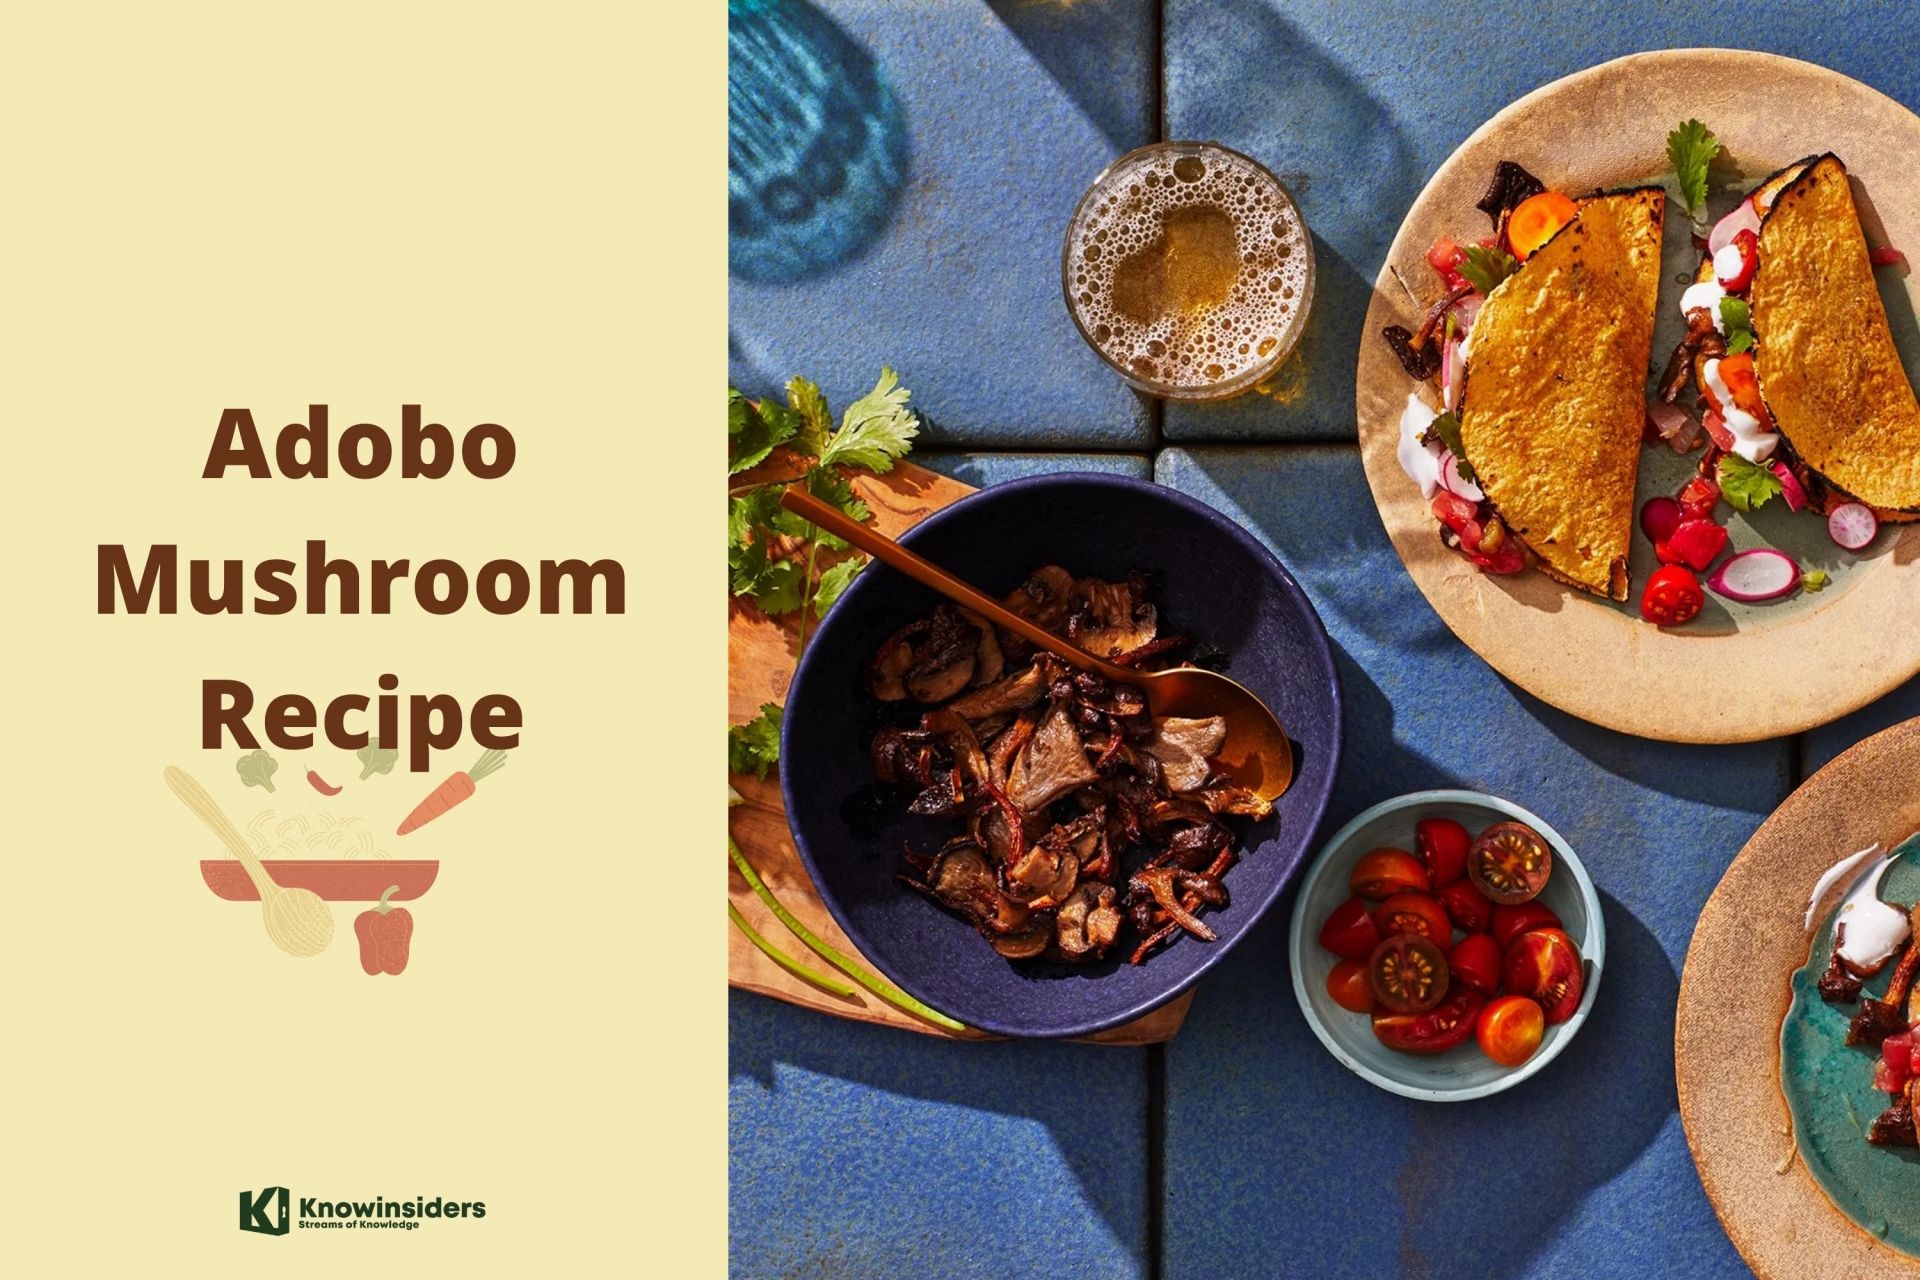 How to Make Adobo Mushroom Tacos with Easy Steps